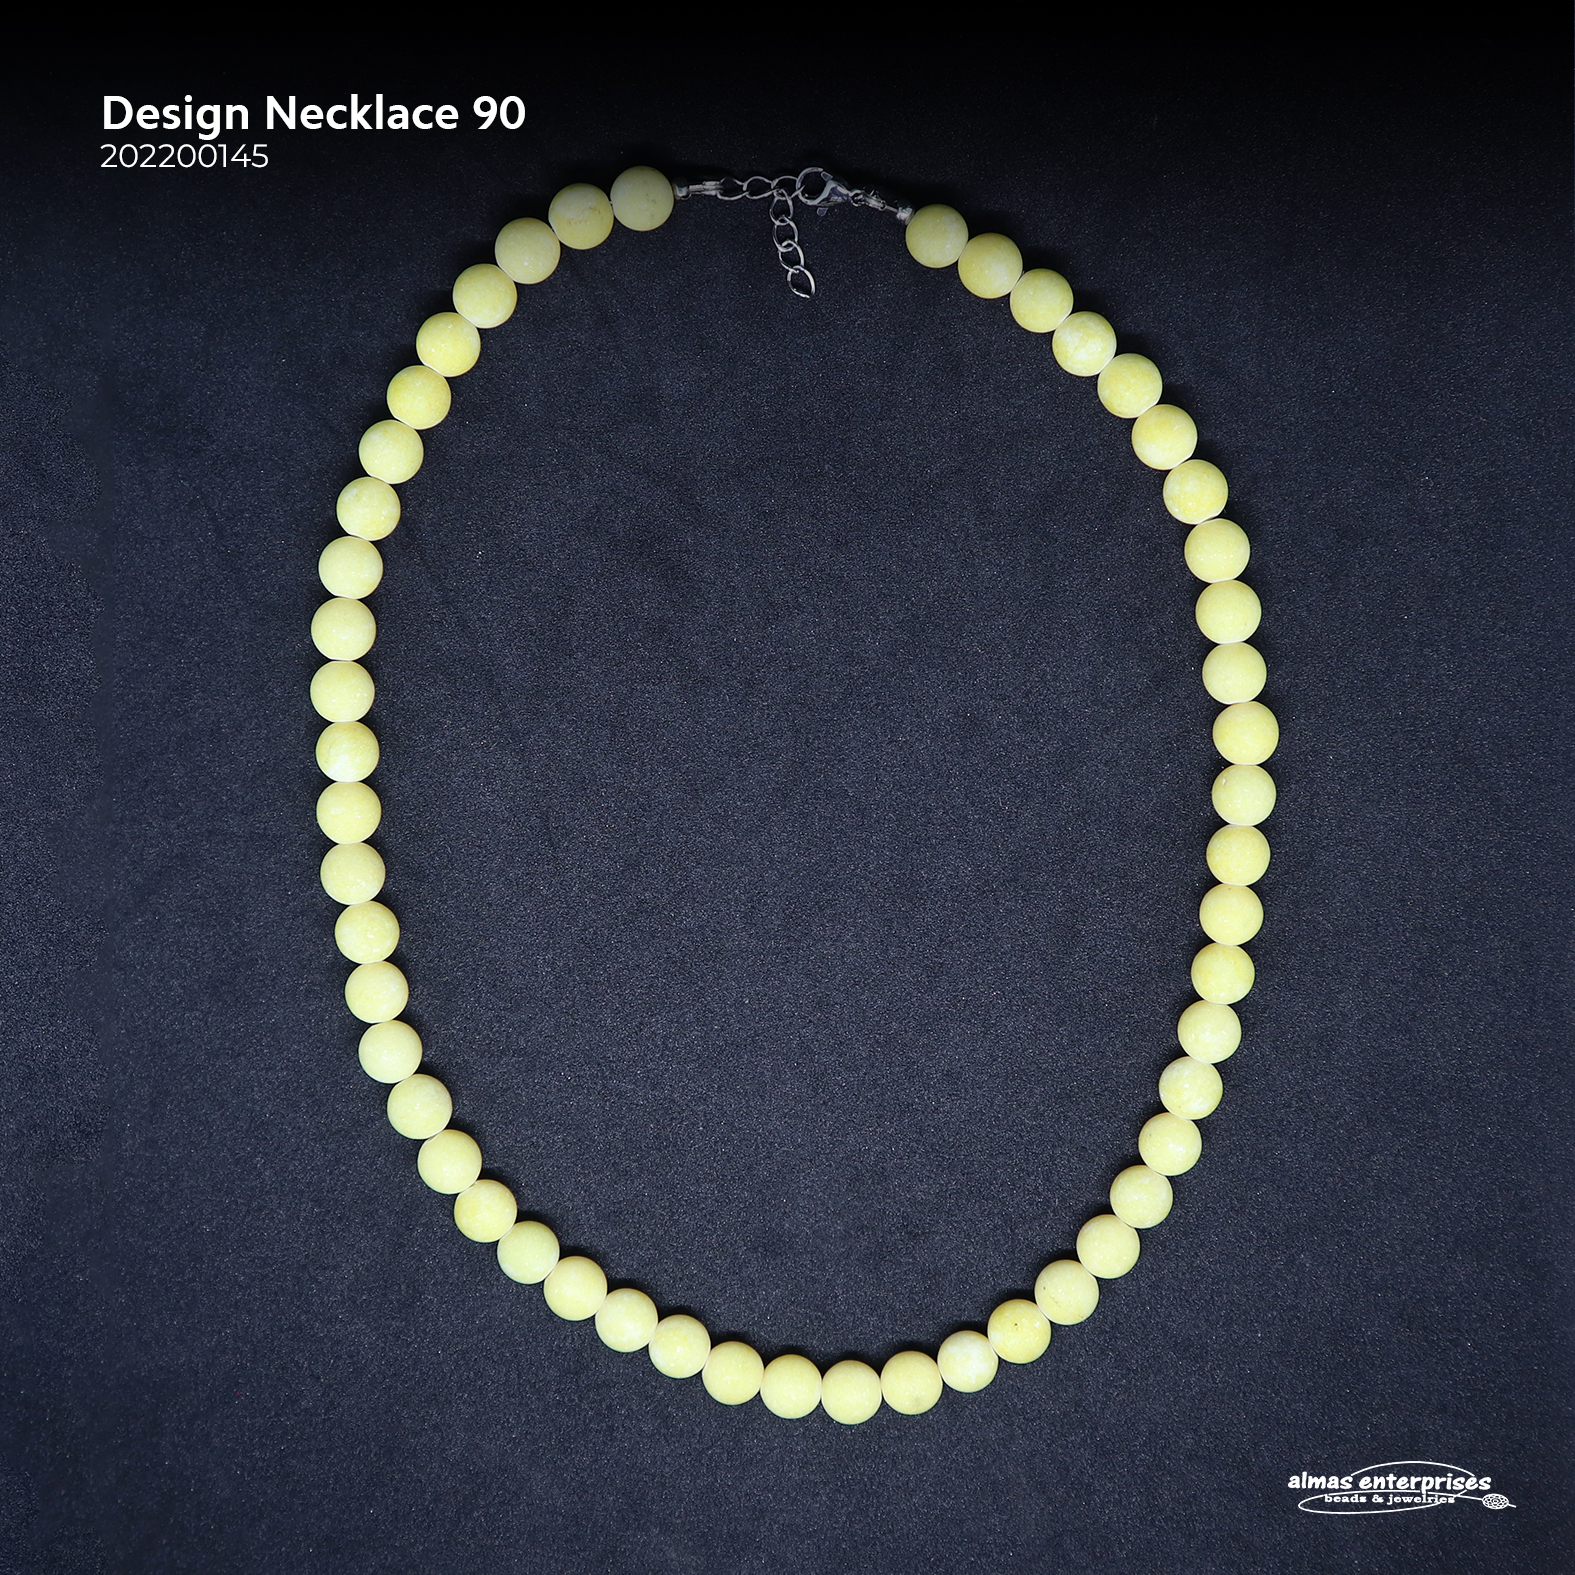 Design Necklace 90